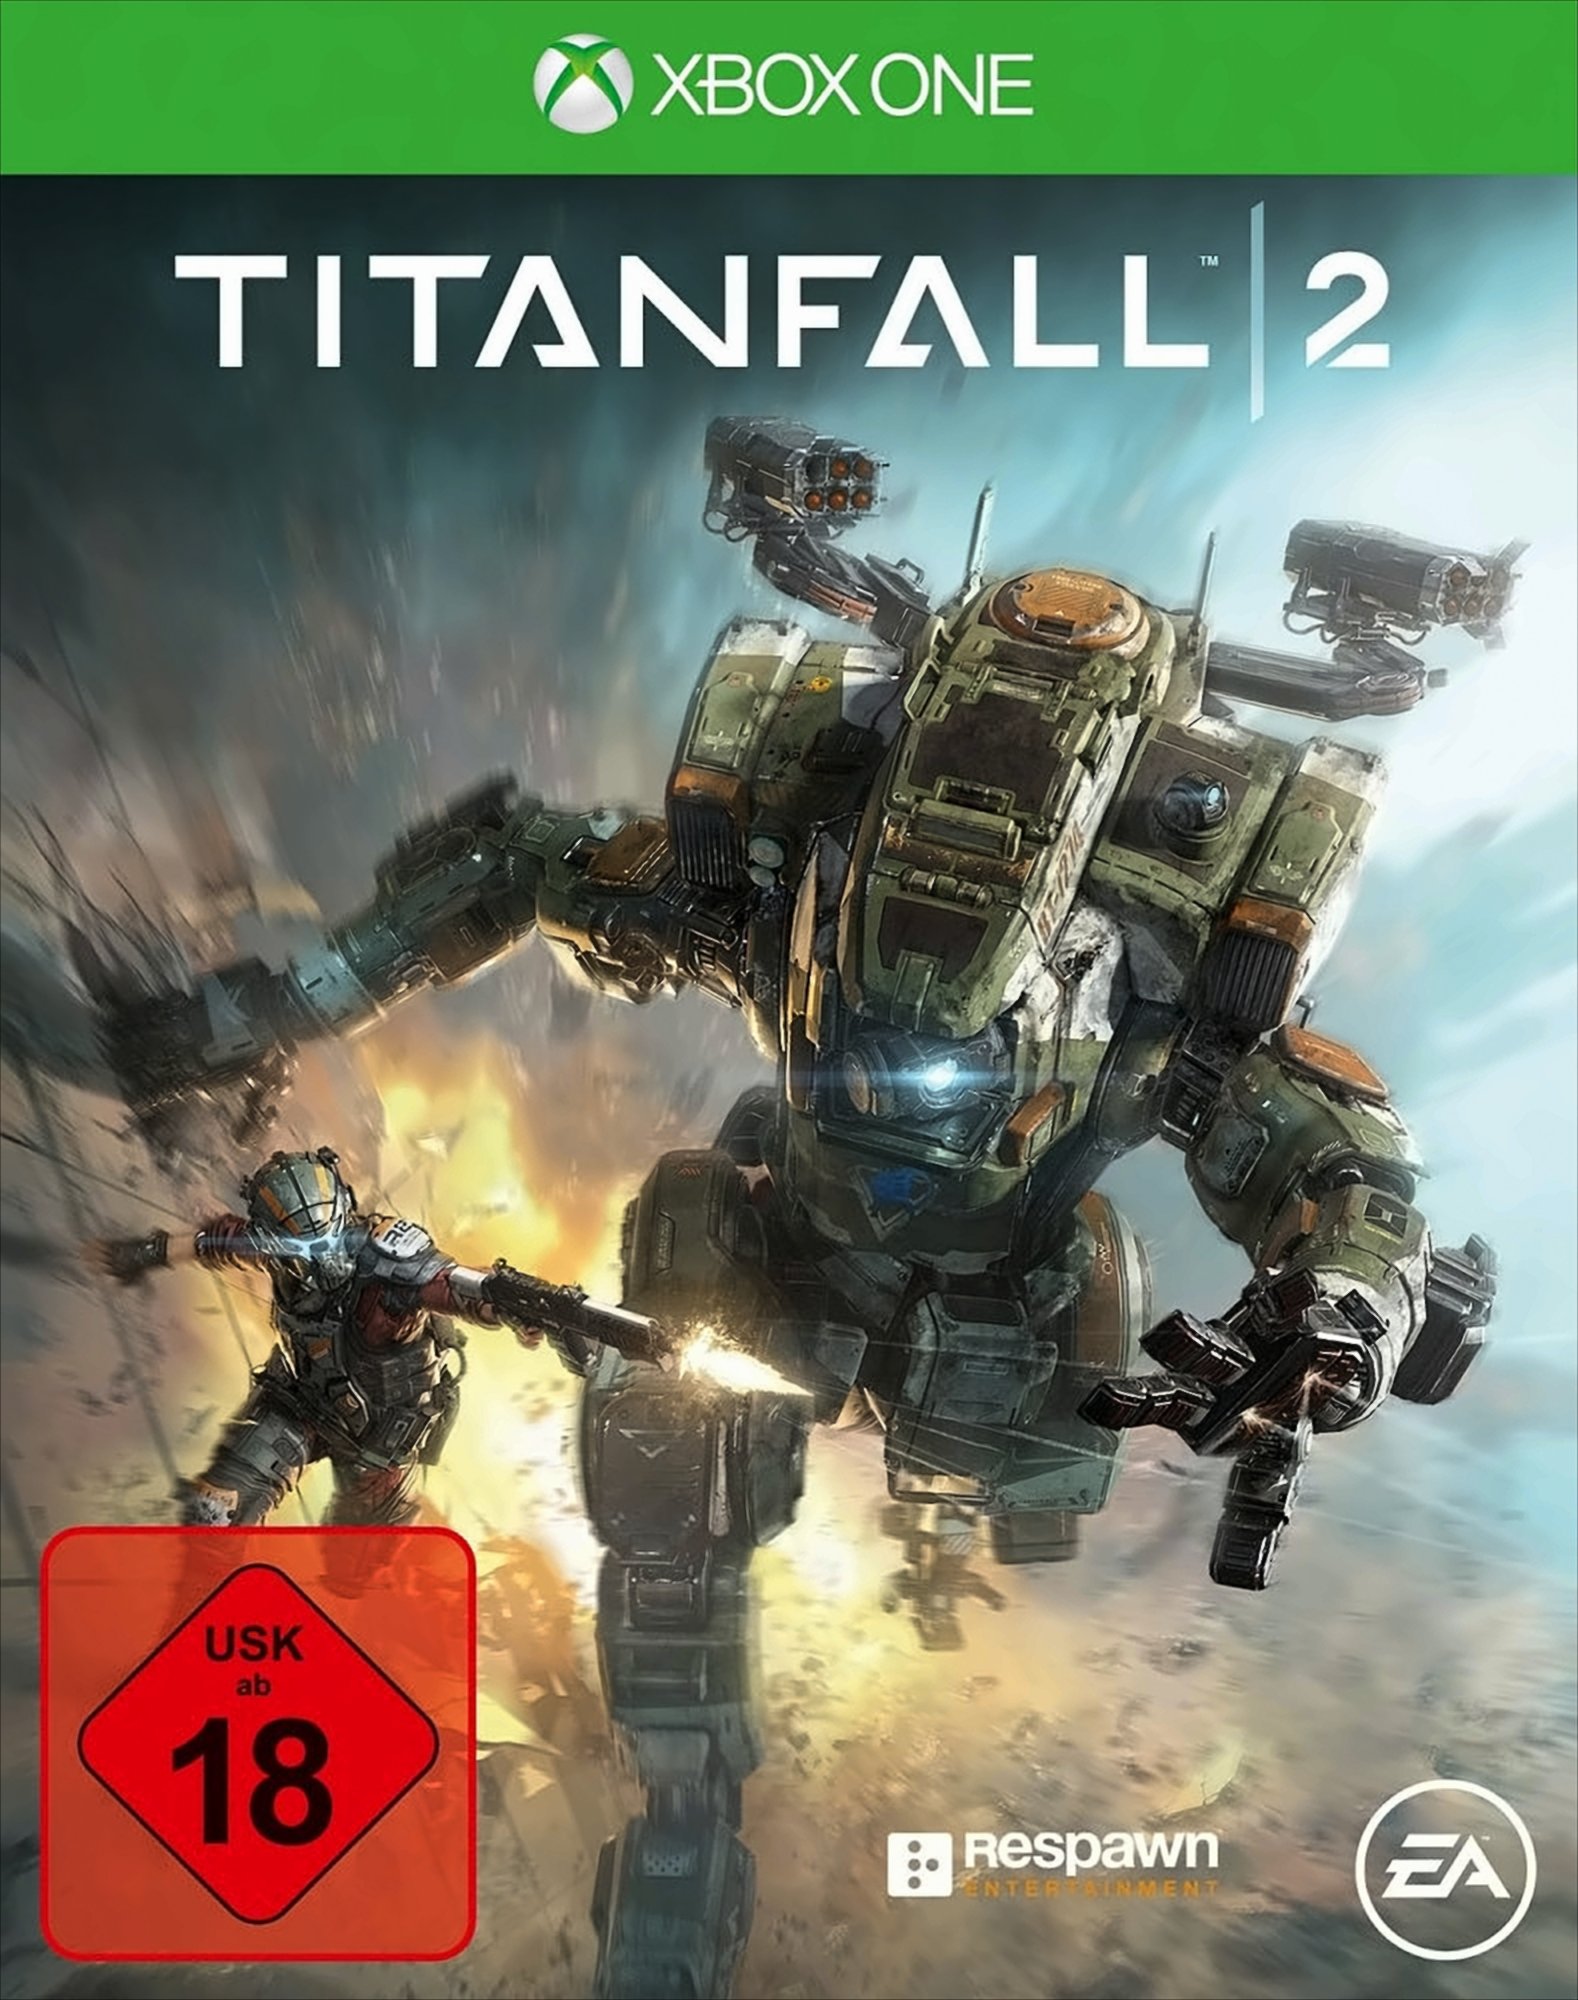 Titanfall 2 von Electronic Arts